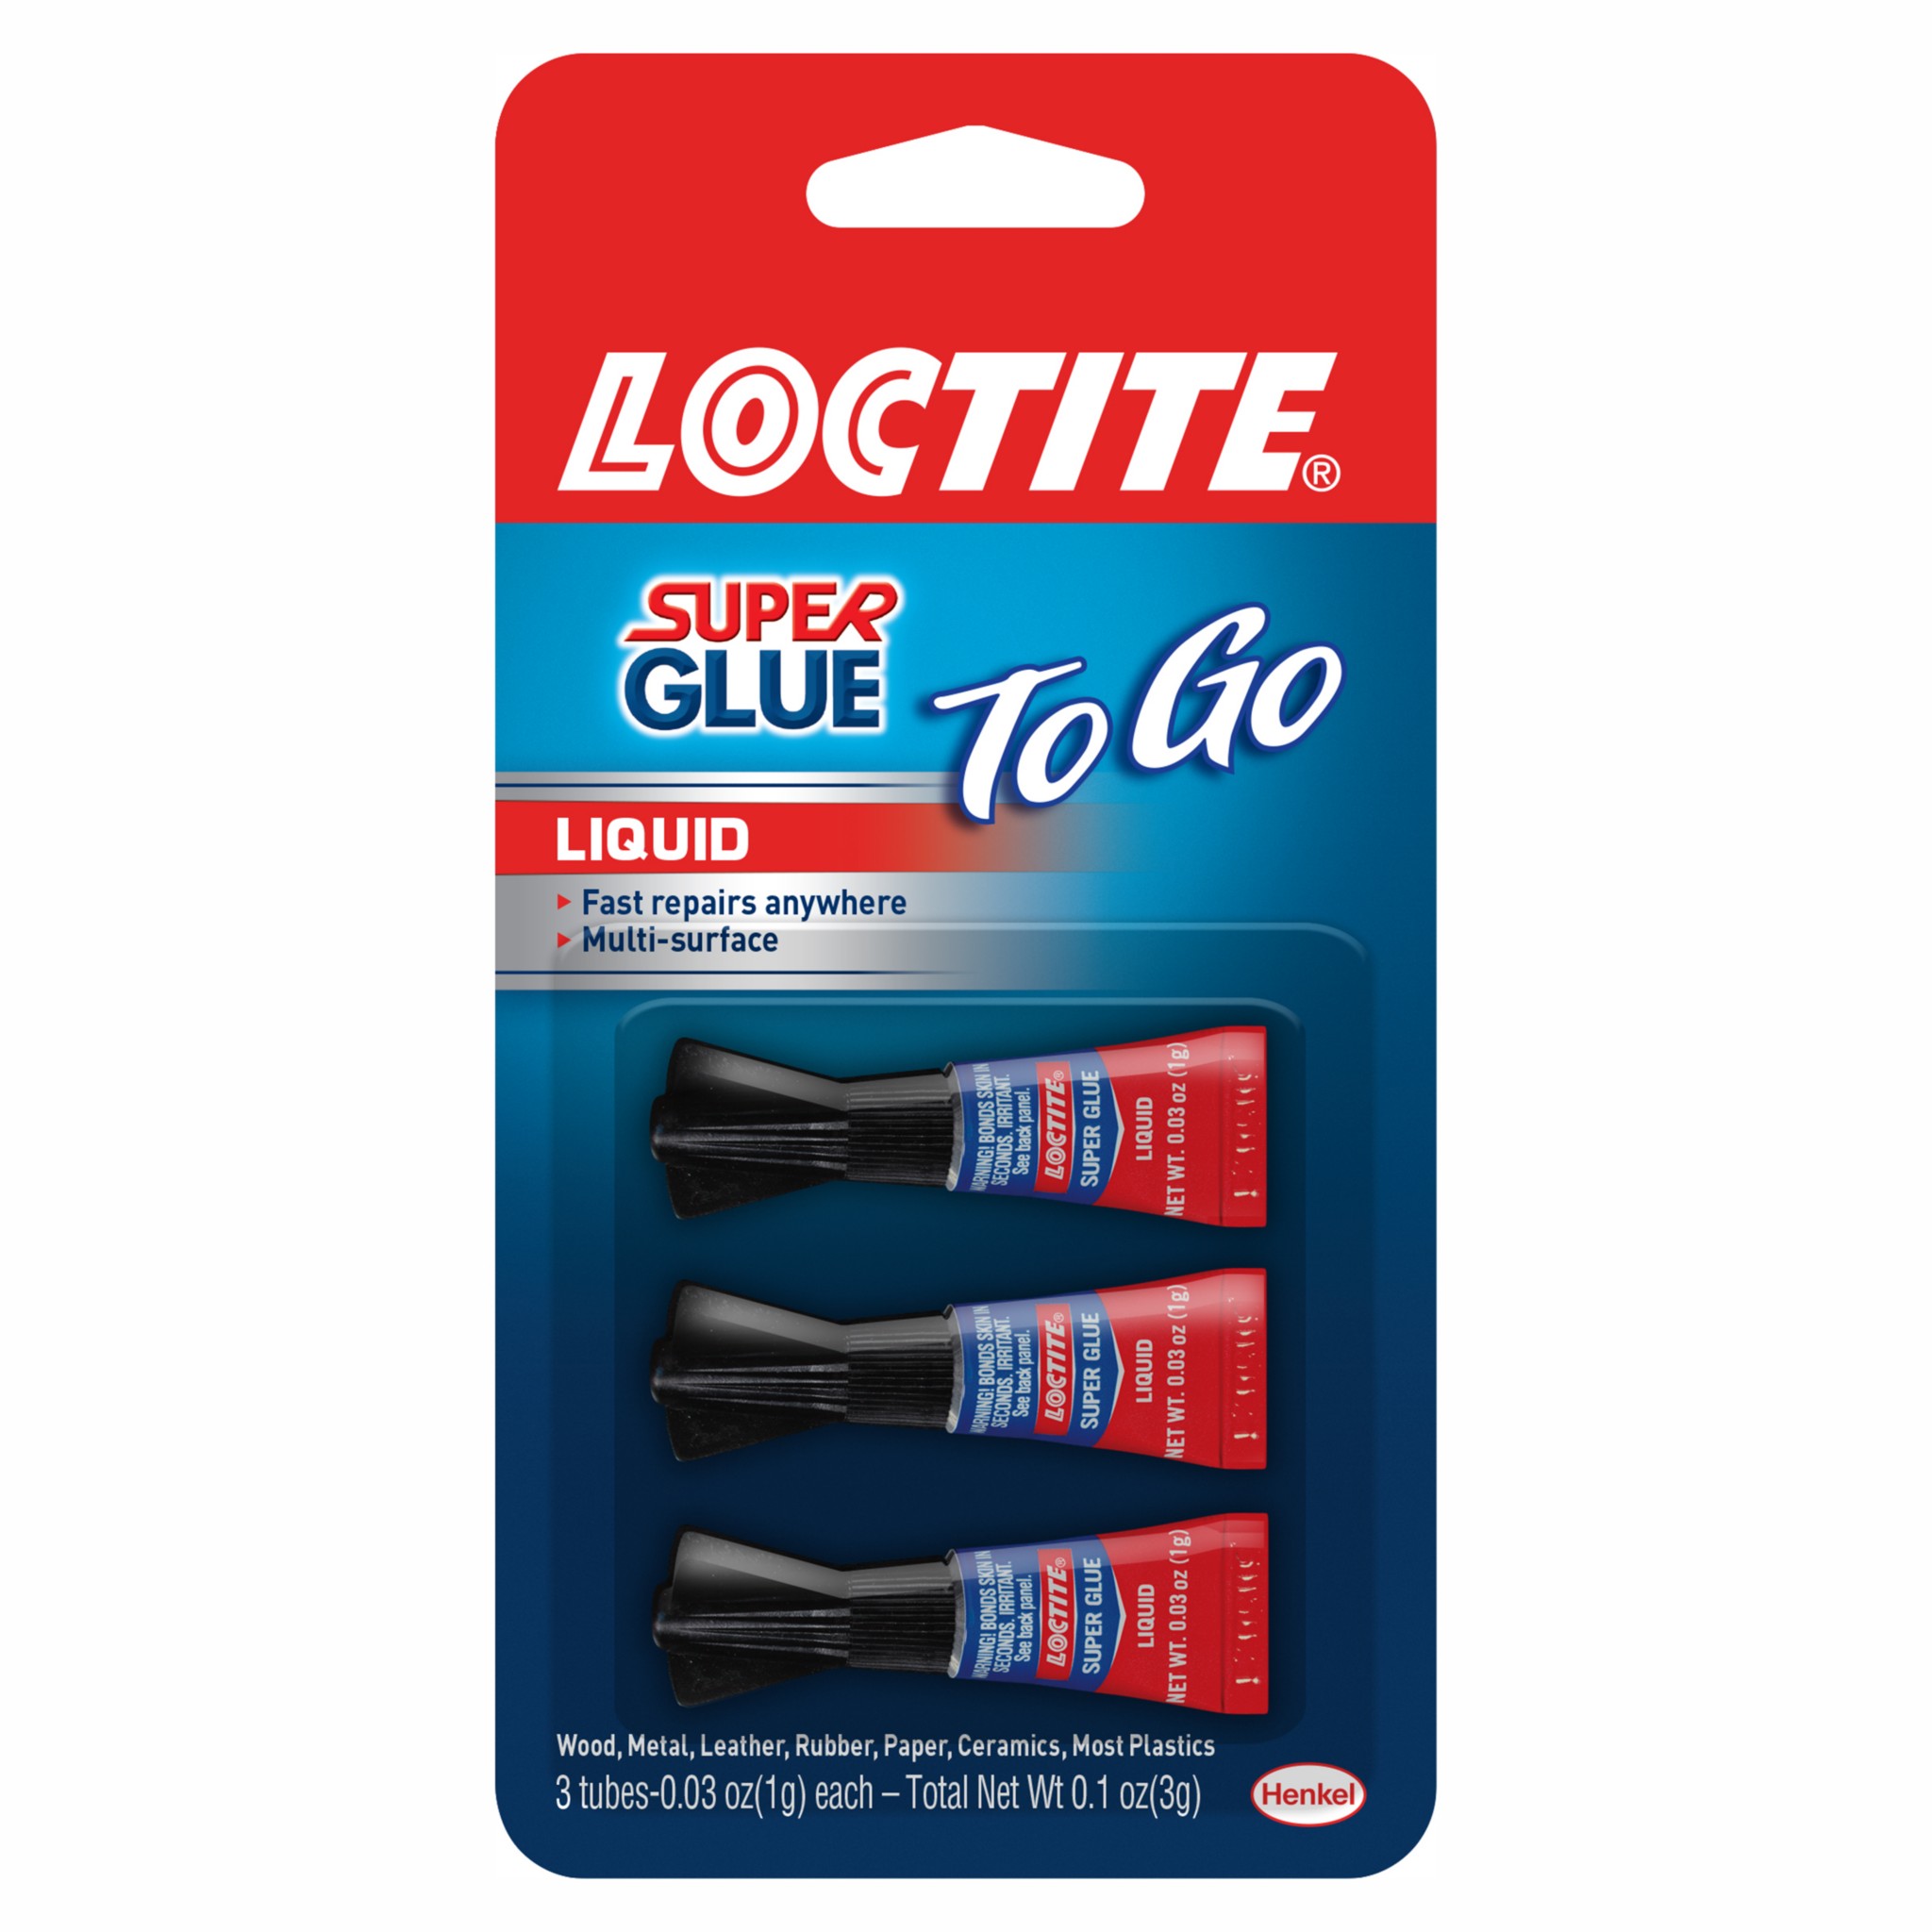 2 pack) Loctite Super Glue Gel Tube, 1 Pack of 2 Tubes, Clear 3 g